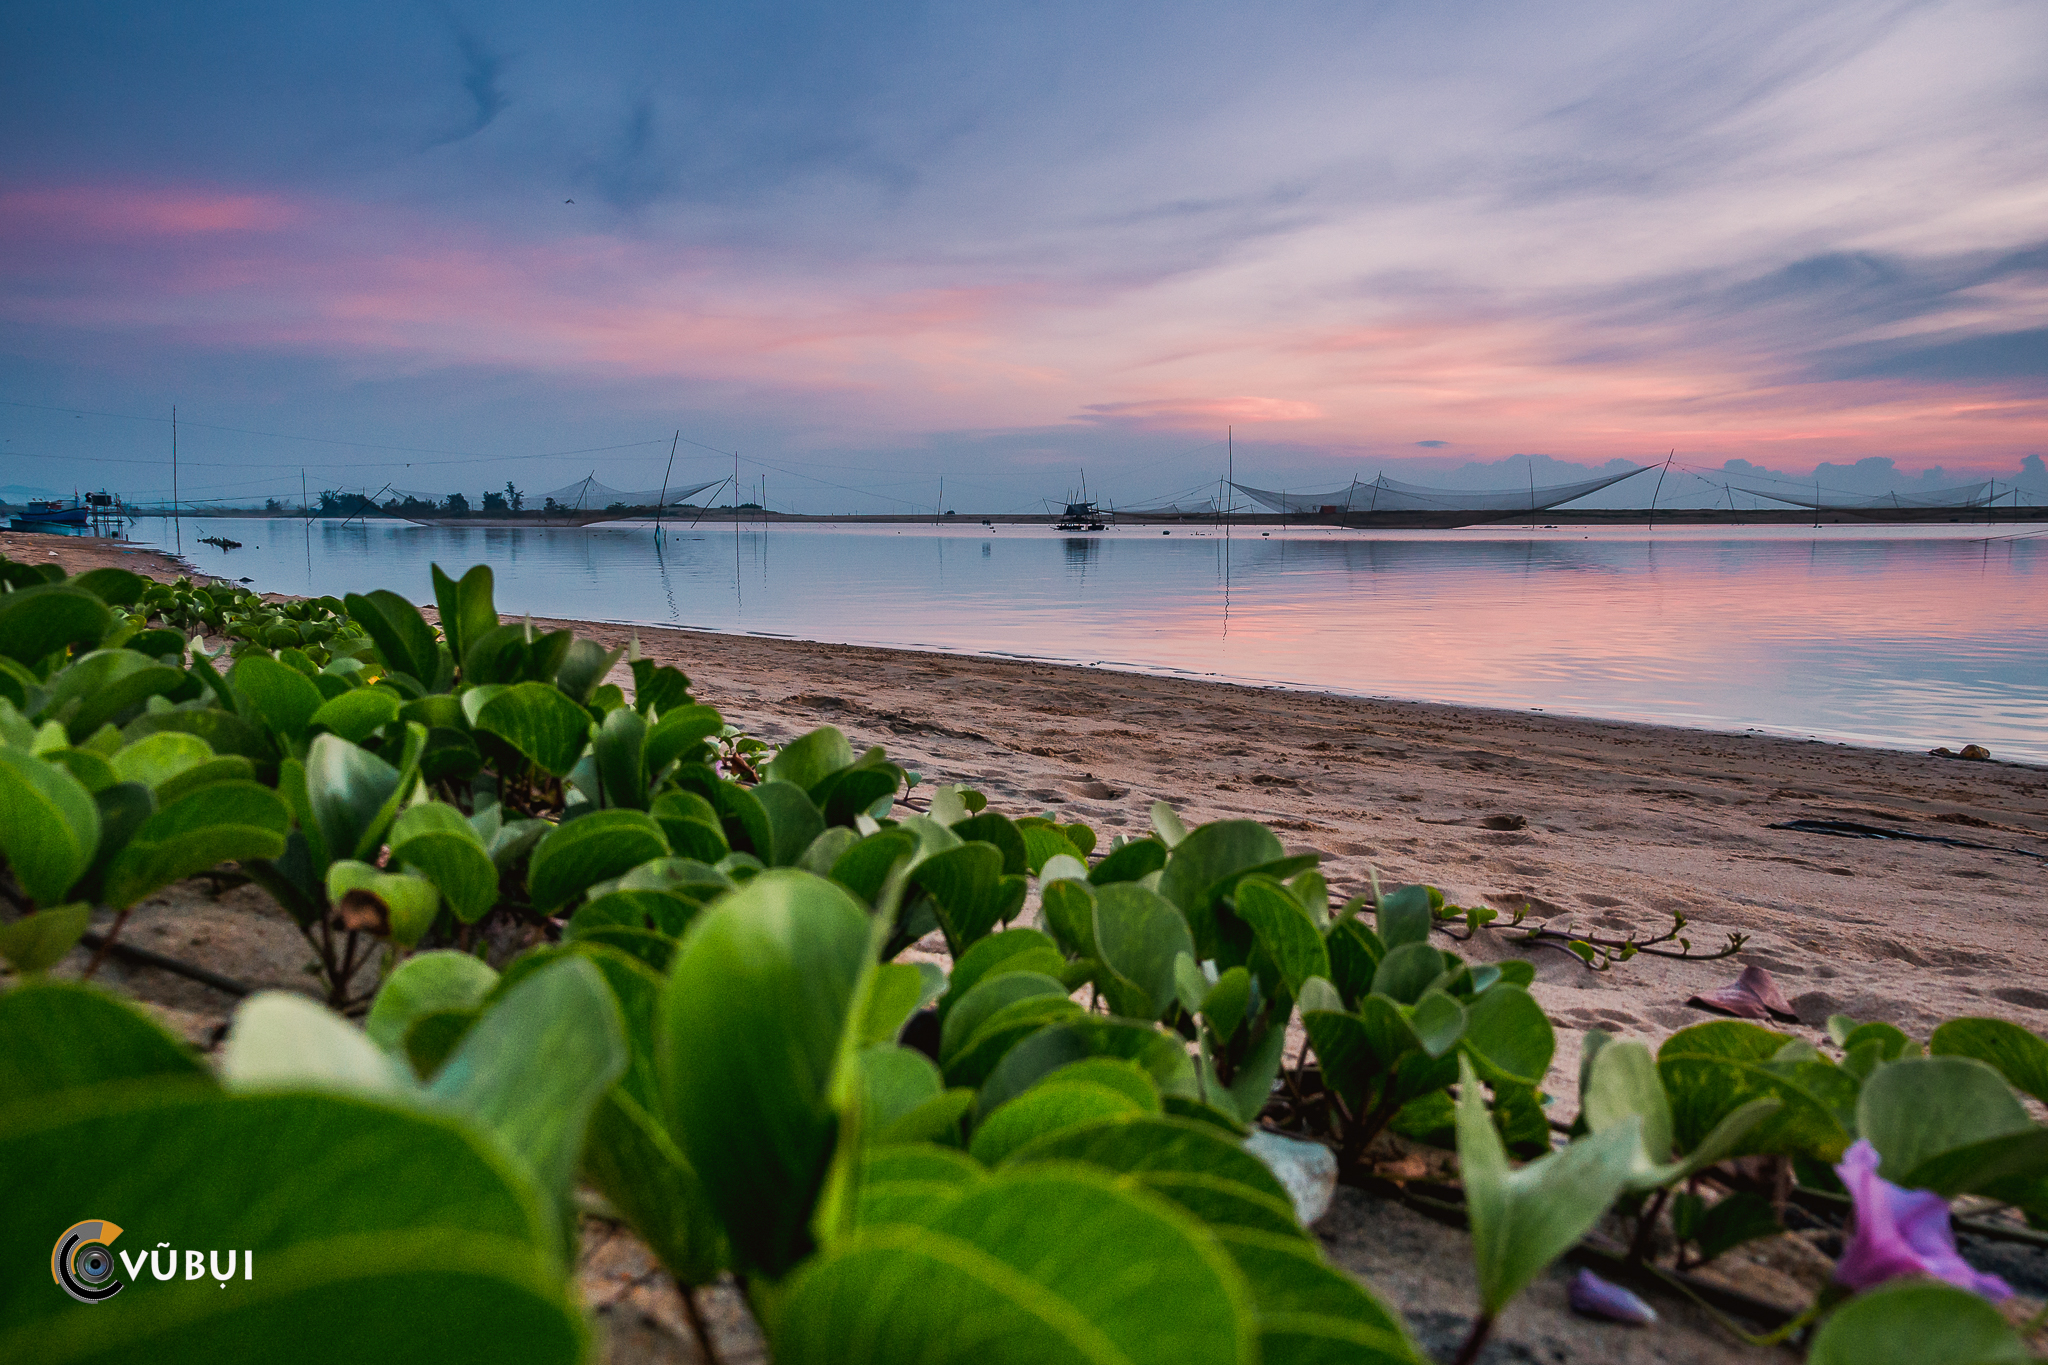 Vietnam, landscapes, Sea, morning, flowers, river, boats, sunrise, summer, Pham Anh Vu